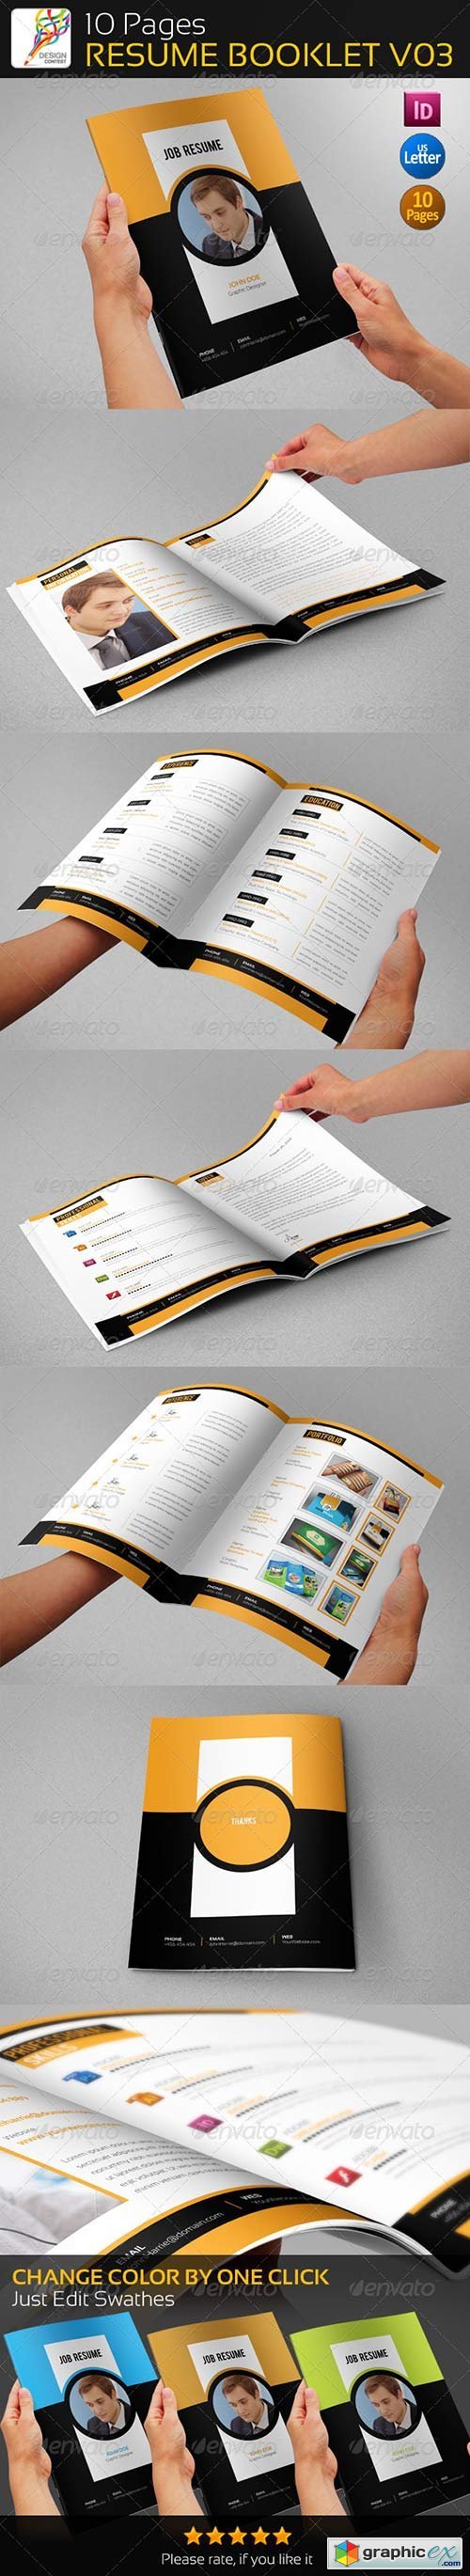 10 Pages Professional Resume Booklet V03